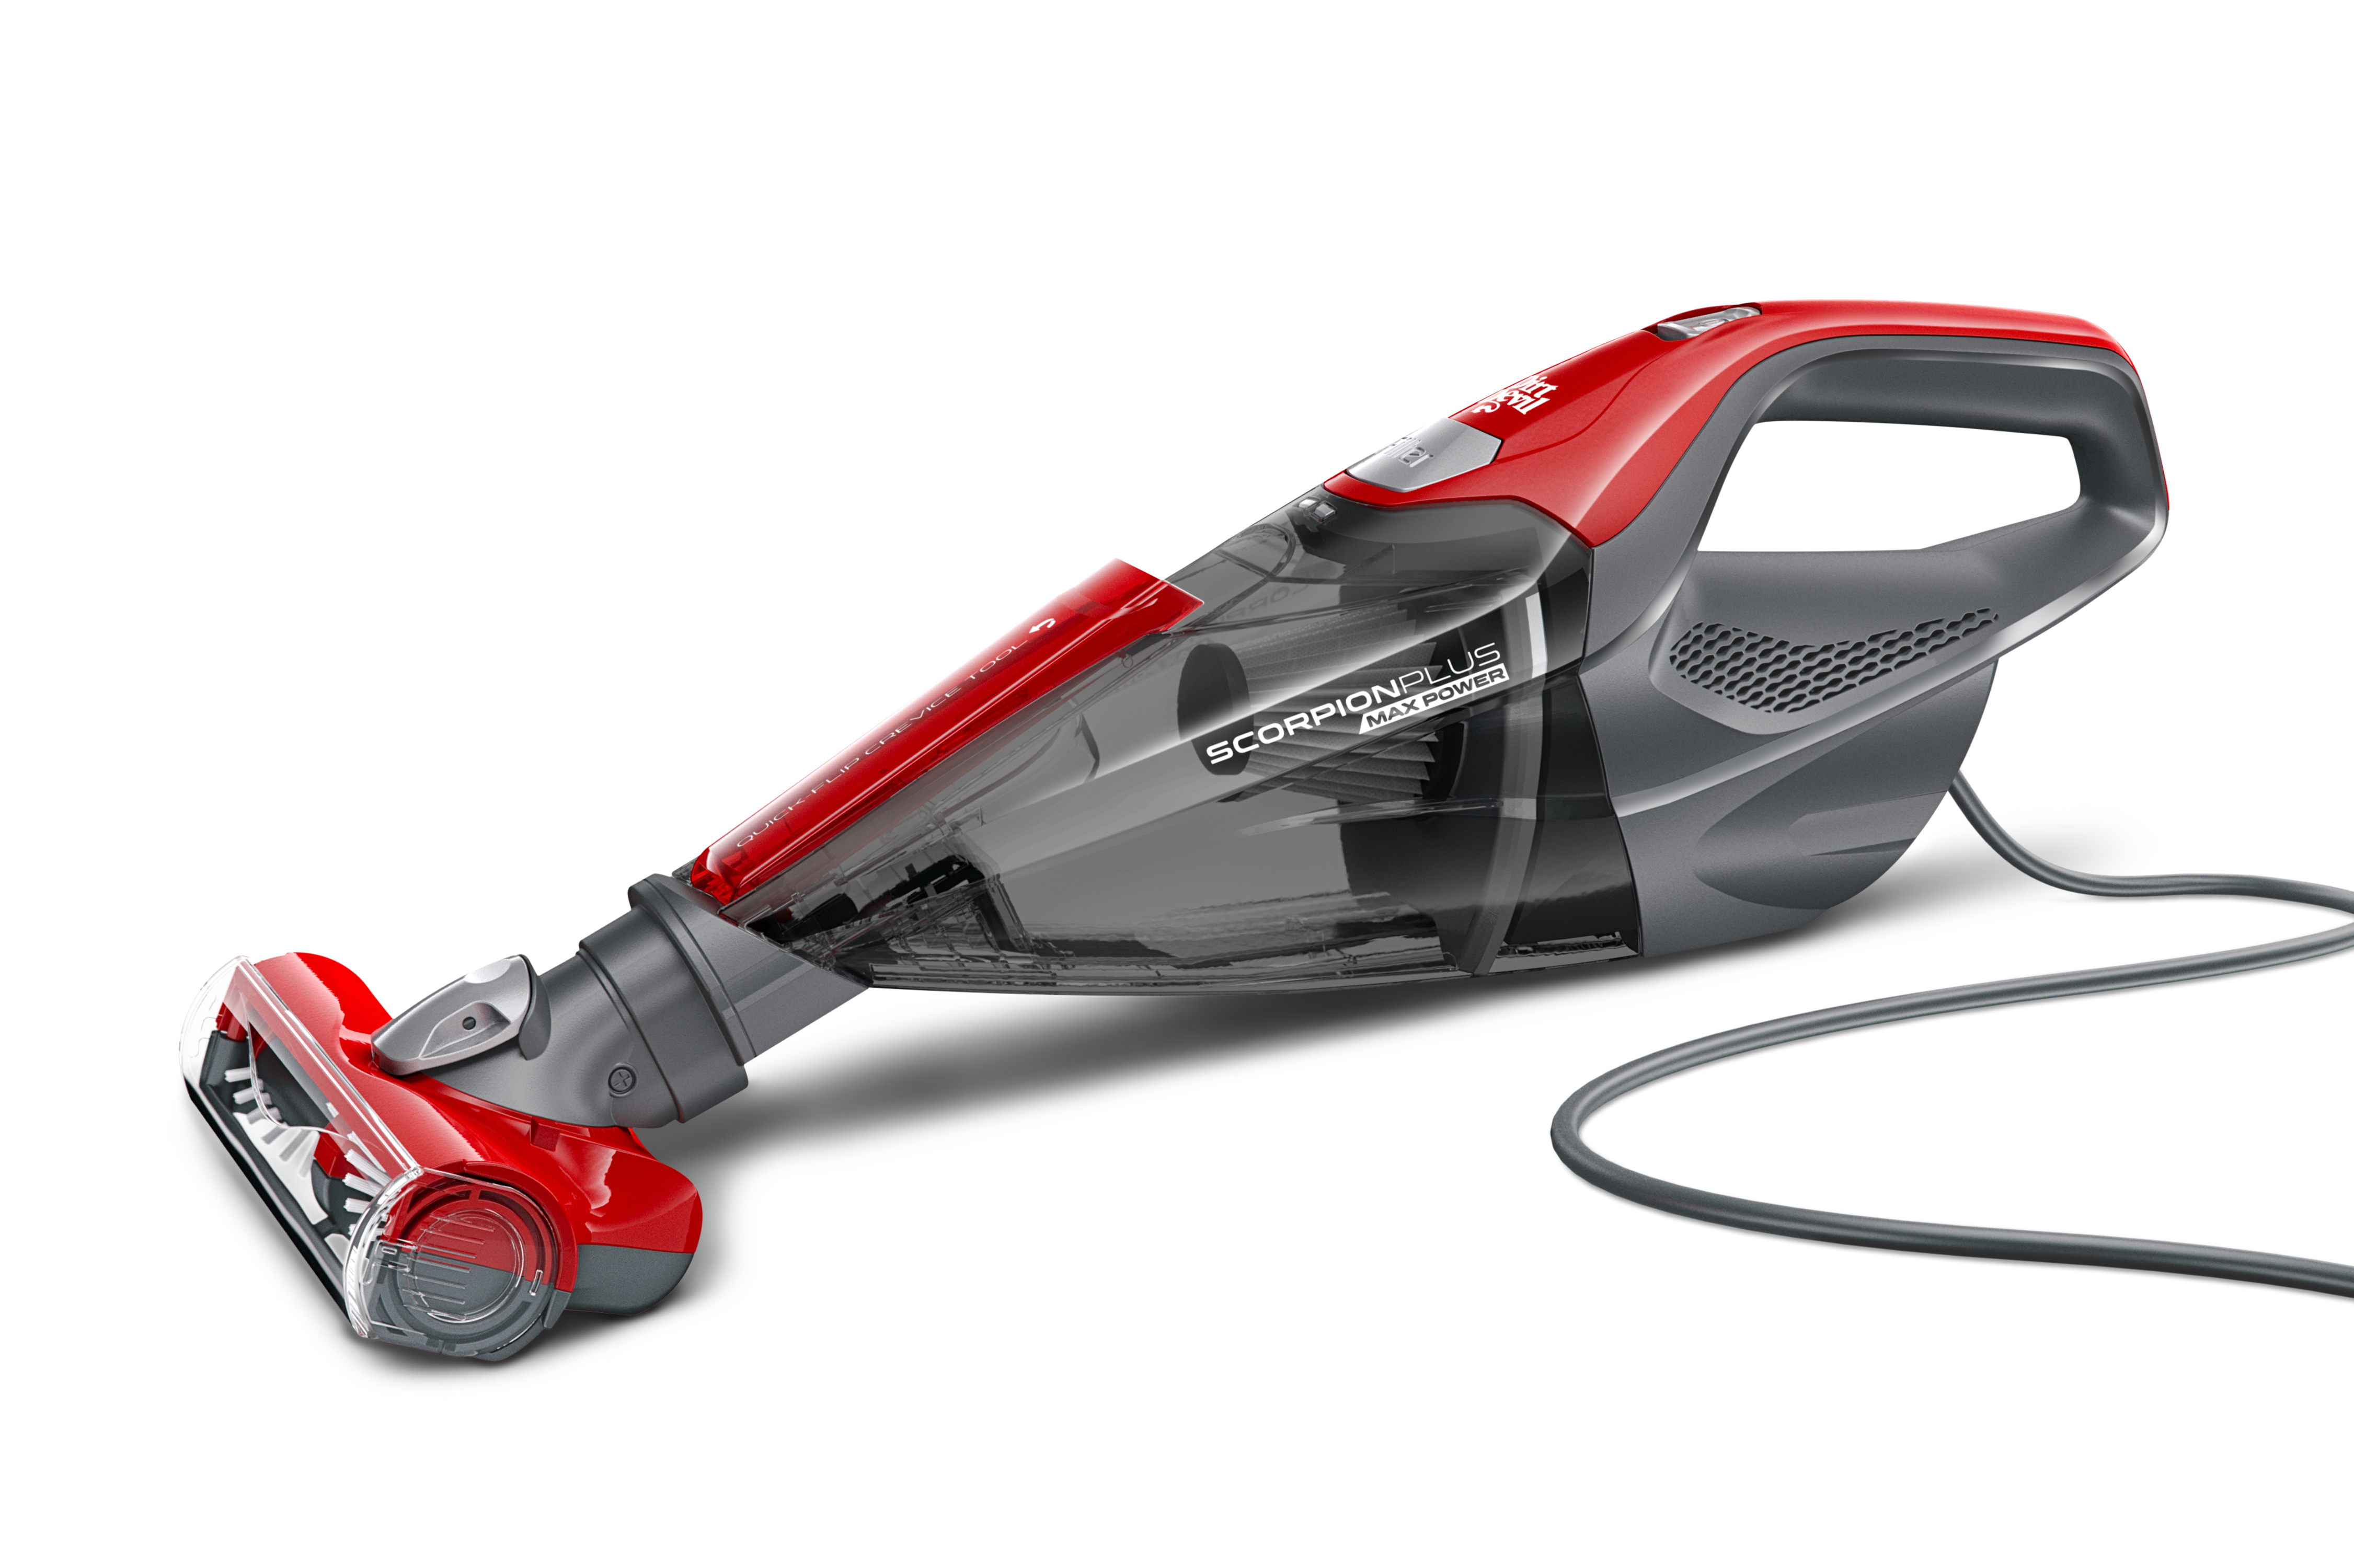 Dirt Devil Scorpion Plus Corded Handheld Vacuum Cleaner, SD30025B $39.94